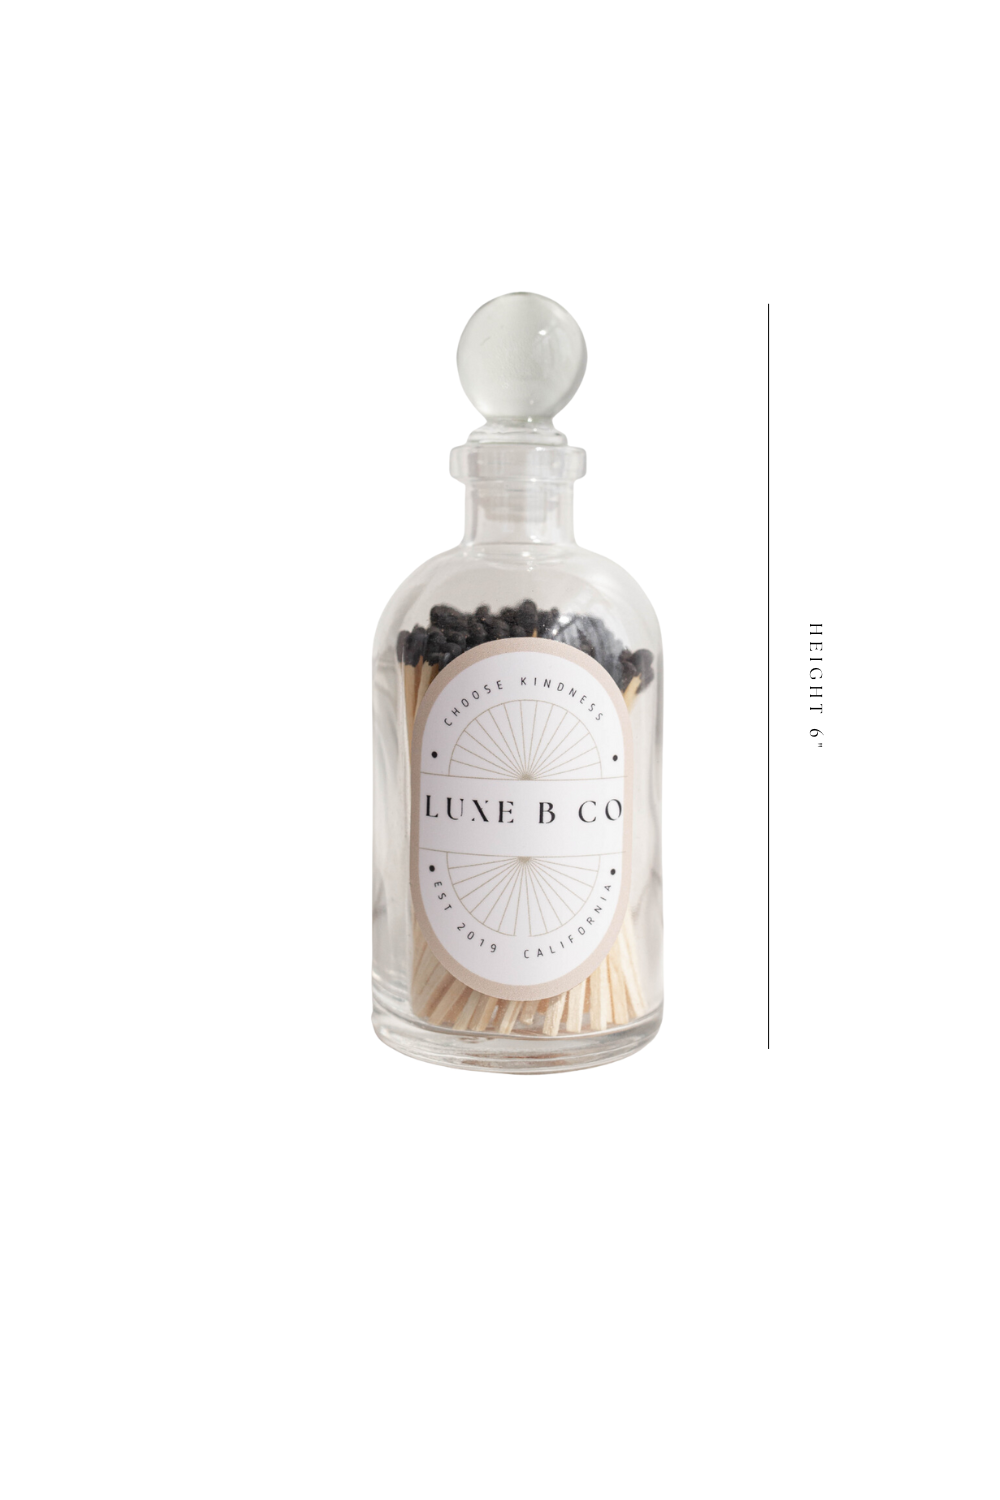 Match Bottles Black by Luxe B Co. - Luxe B Co